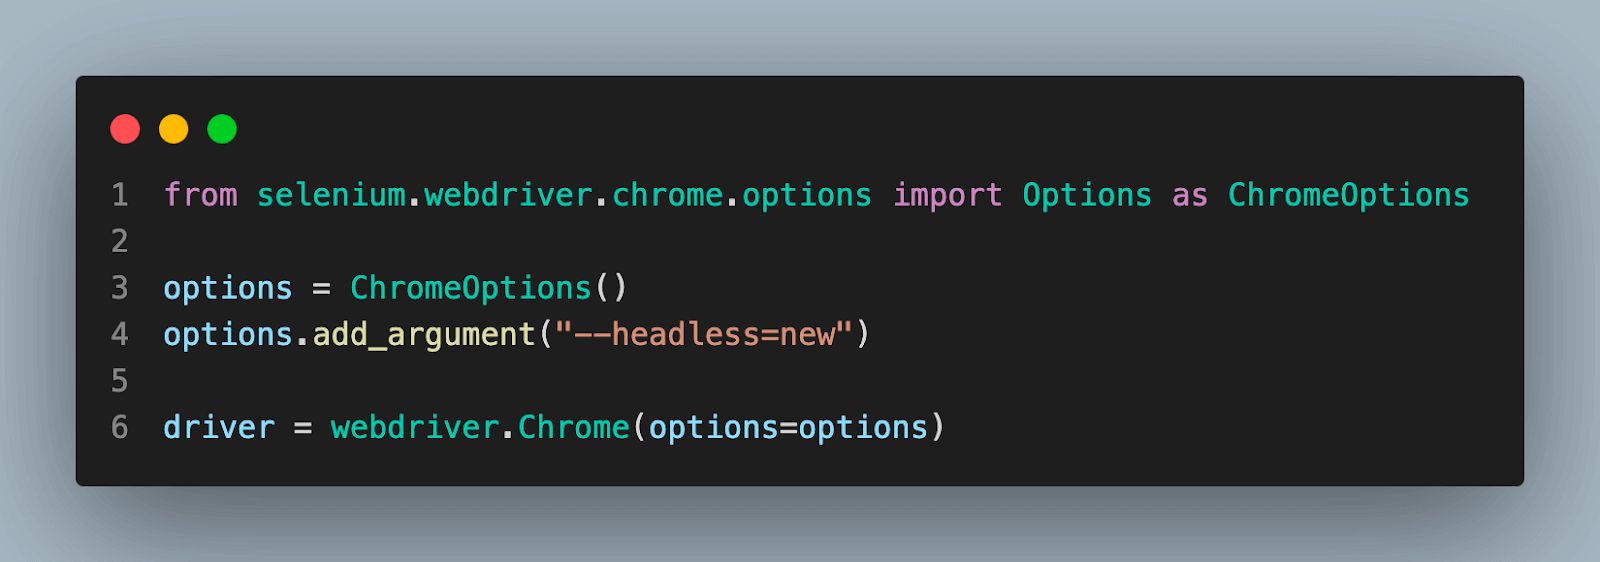 Headless Chrome is enabled using ChromeOptions(). 